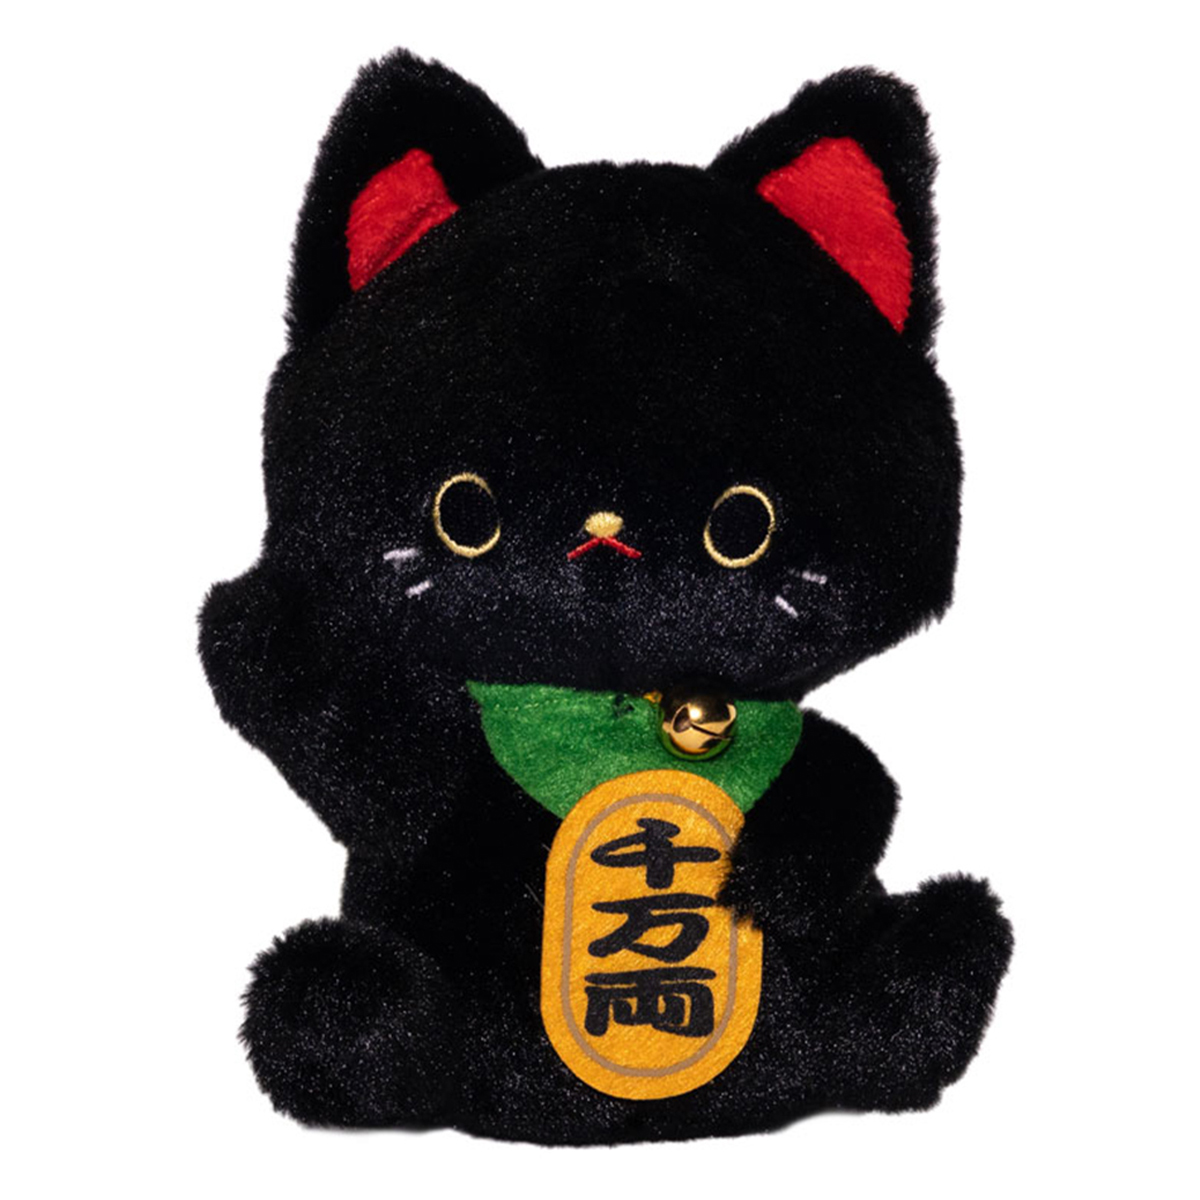 Kawaii Neko Plushie Black Cat Plush Doll Super Soft Stuffed Animal Standard Size 5